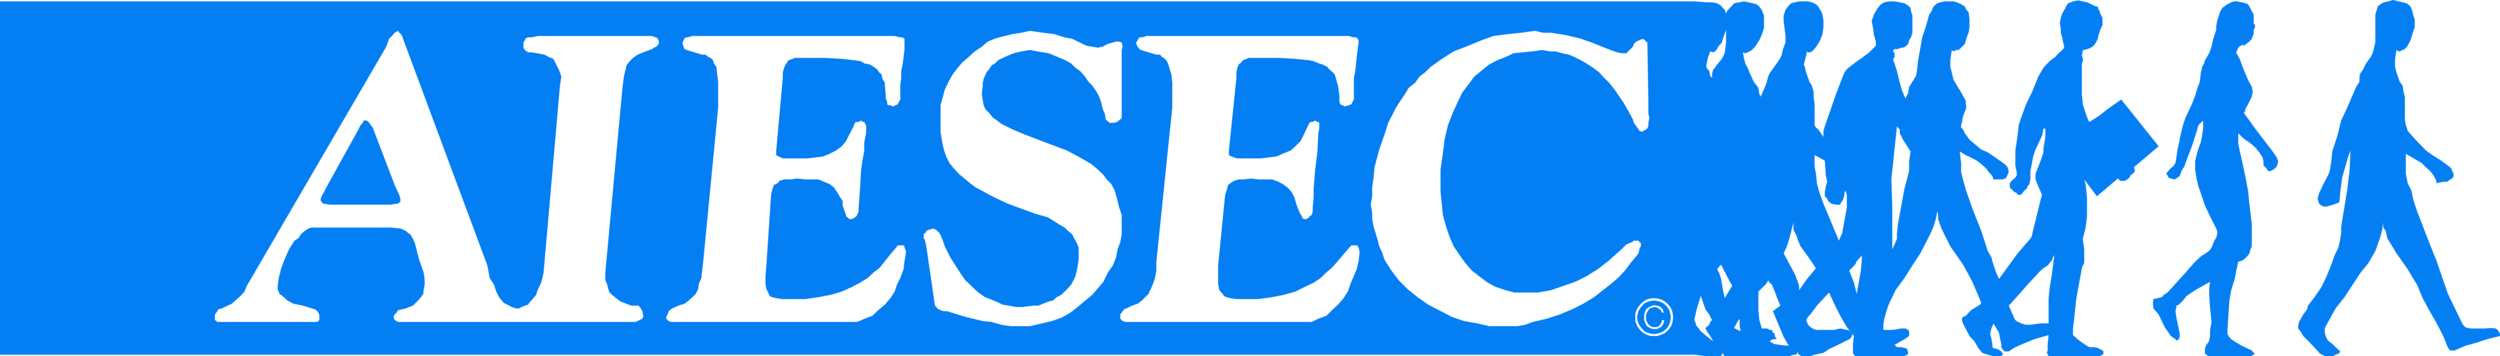 aiesec logo generated by AI logo maker - Logomakerr.ai